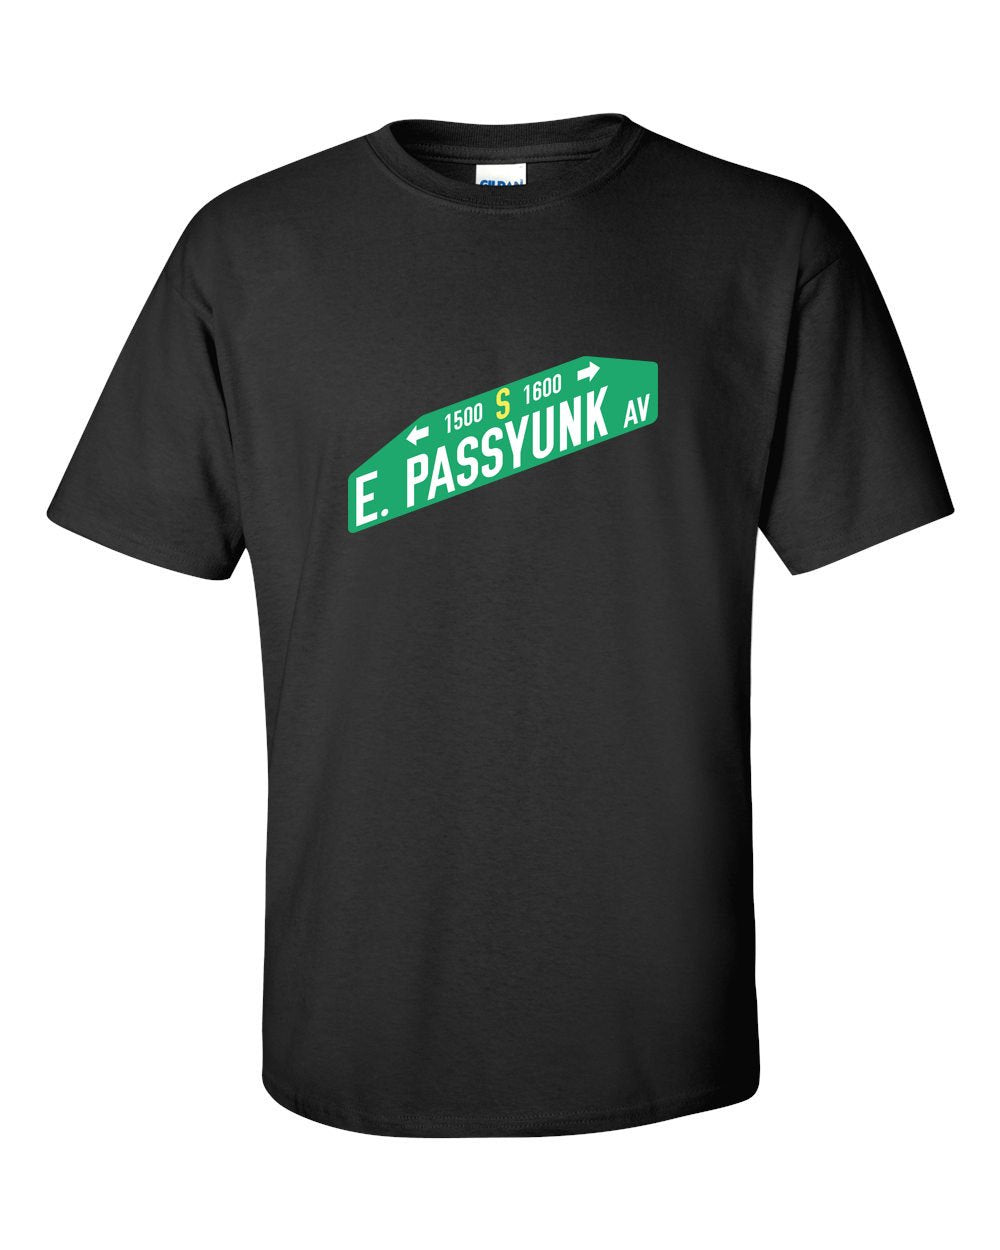 East Passyunk Mens/Unisex T-Shirt